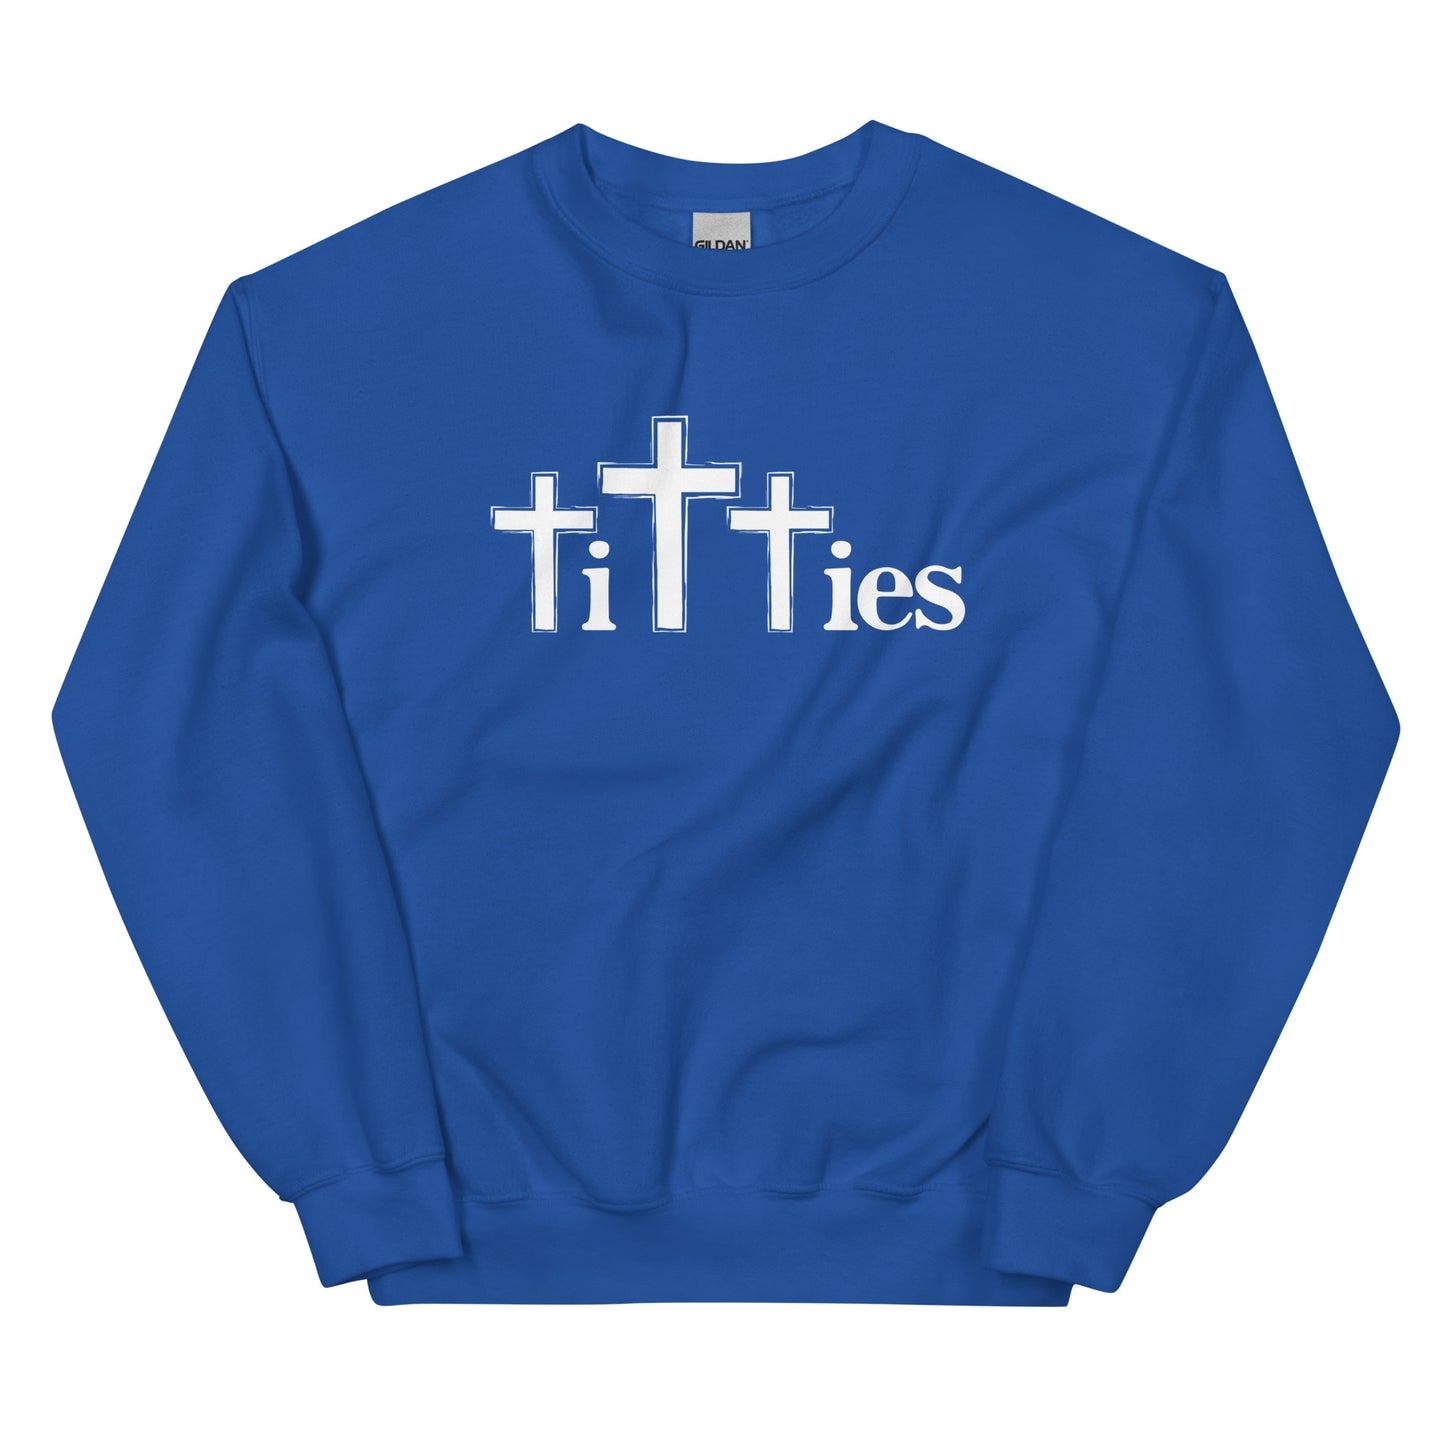 Titties (Crosses) Unisex Sweatshirt